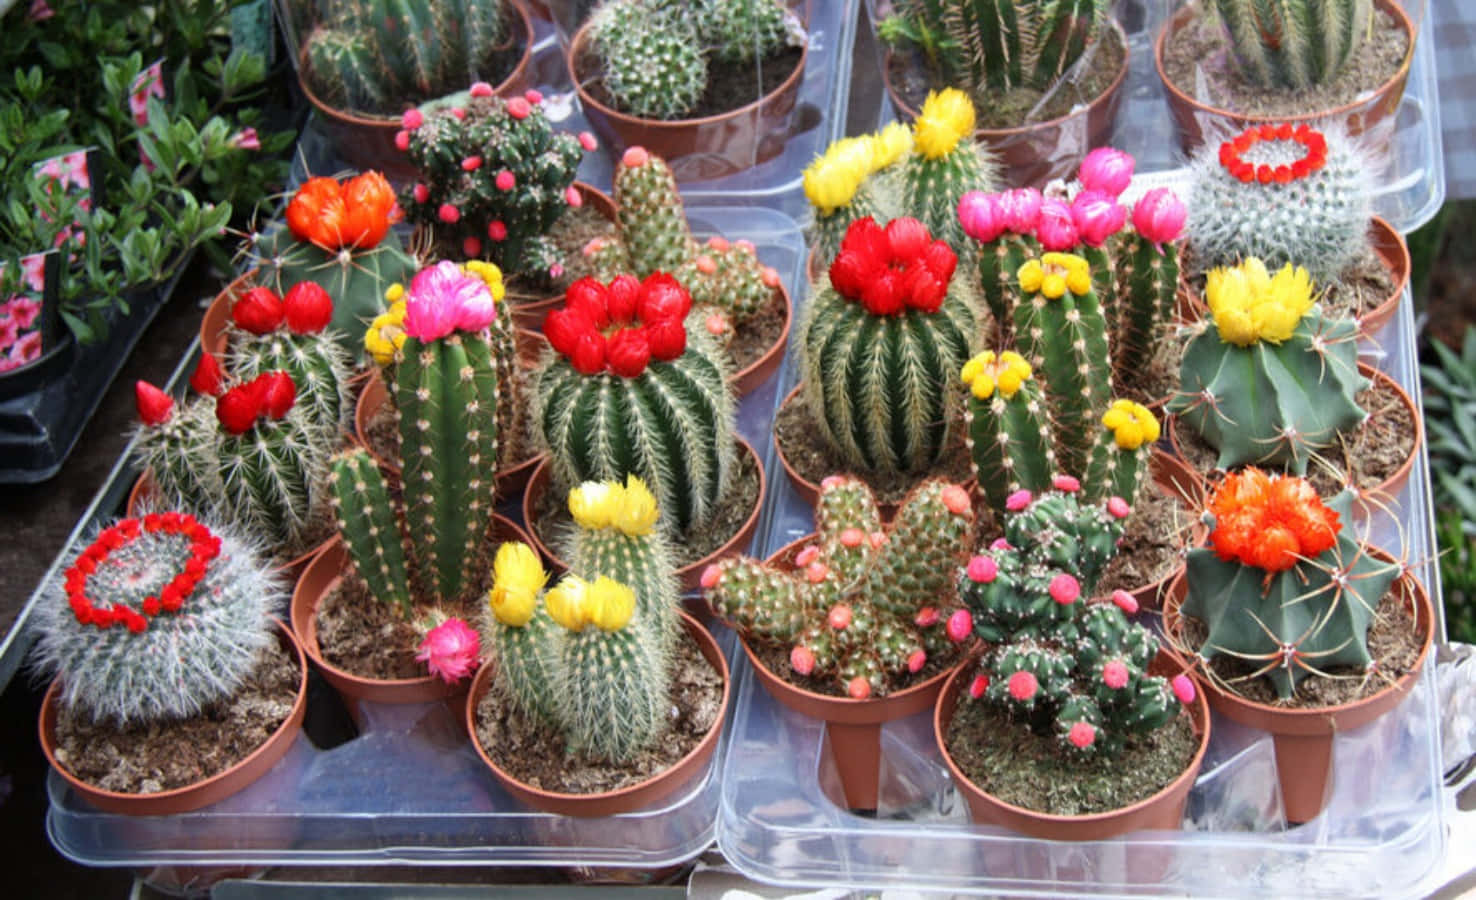 A desert landscape filled with cactus plants